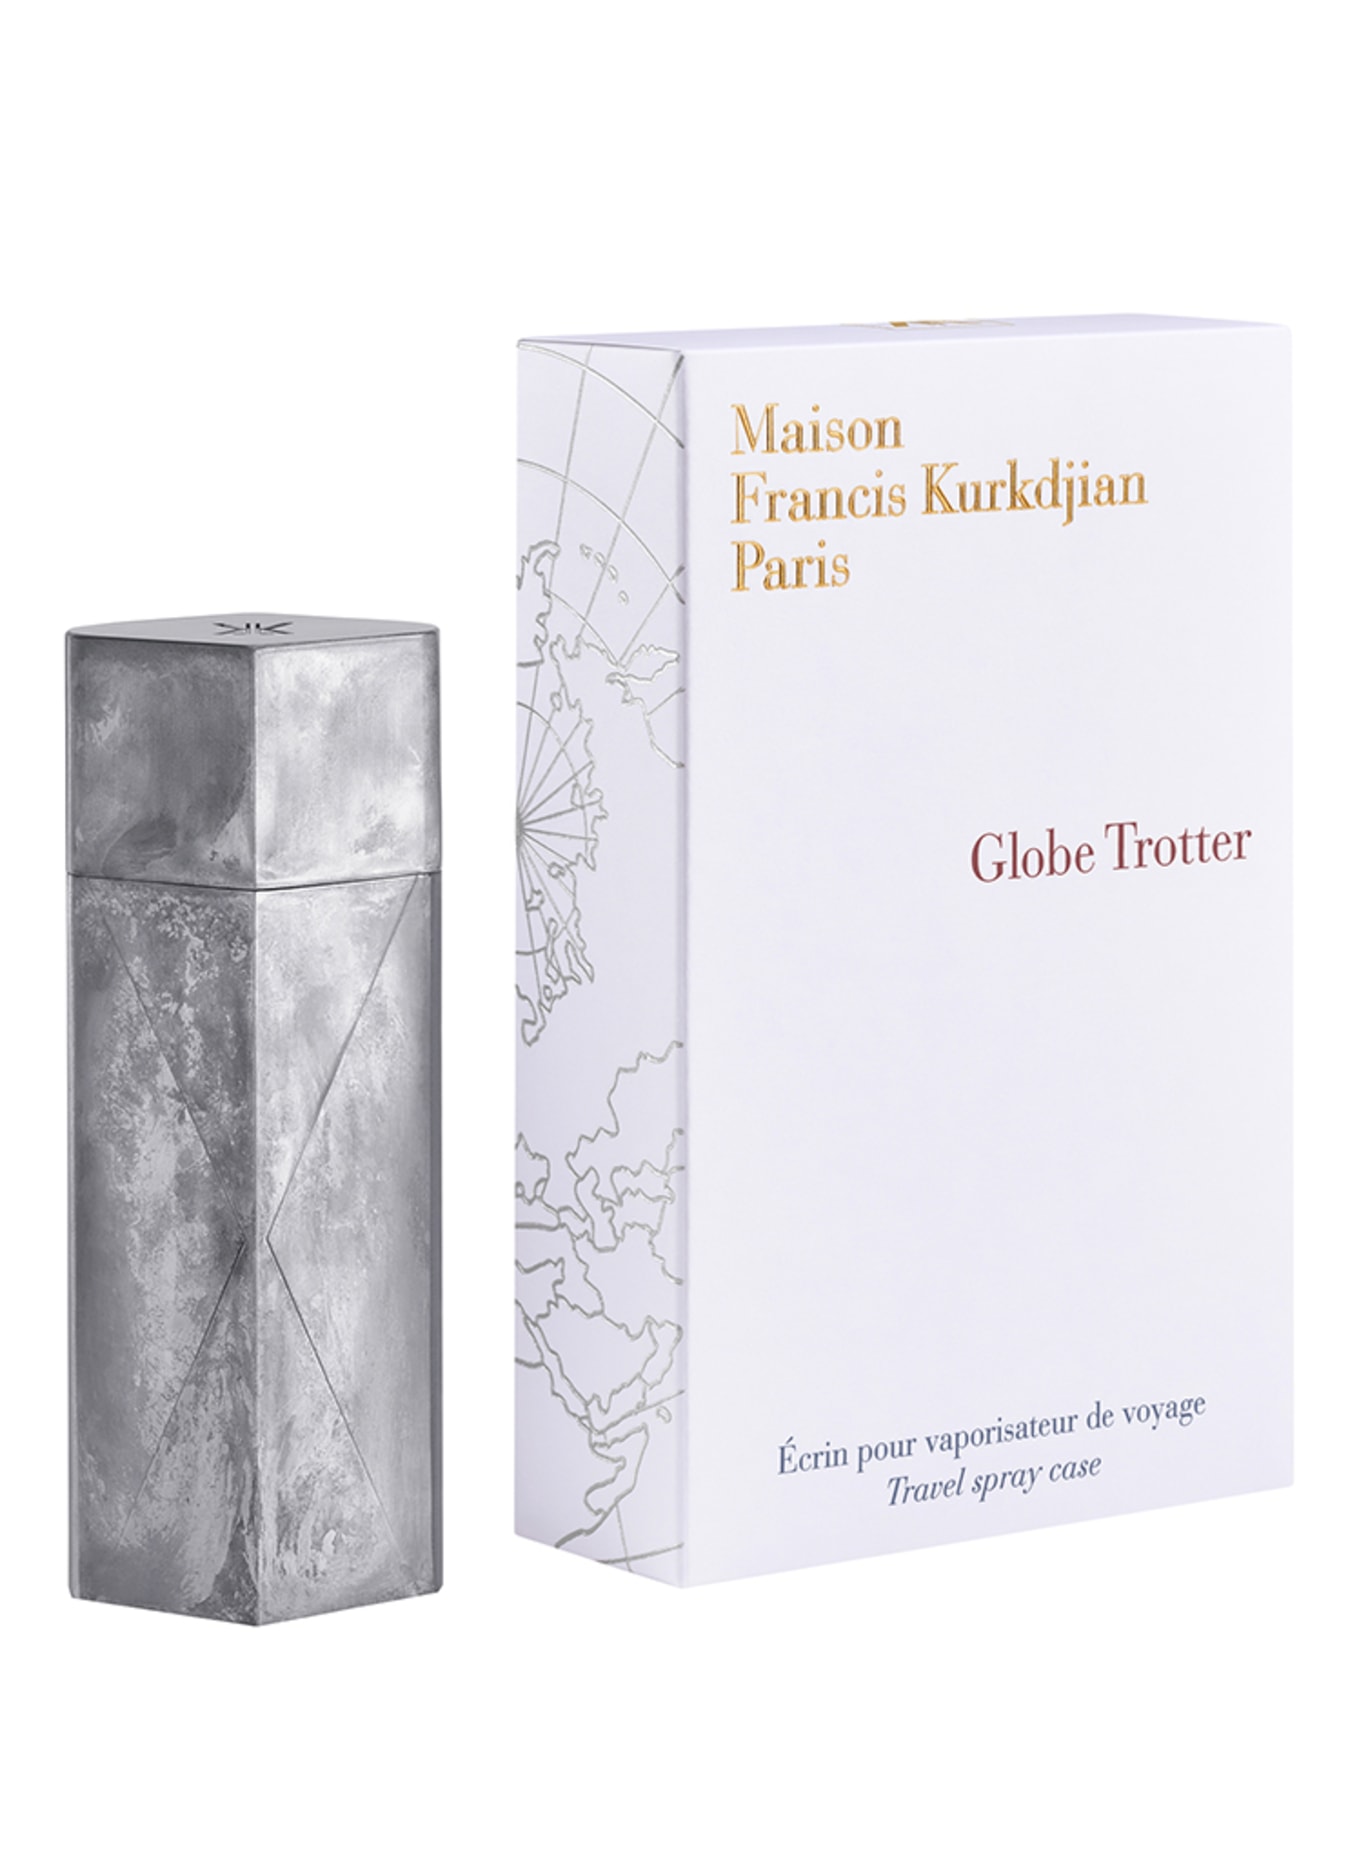 Maison Francis Kurkdjian Paris GLOBE TROTTER - ZINC EDITION (Obrazek 2)